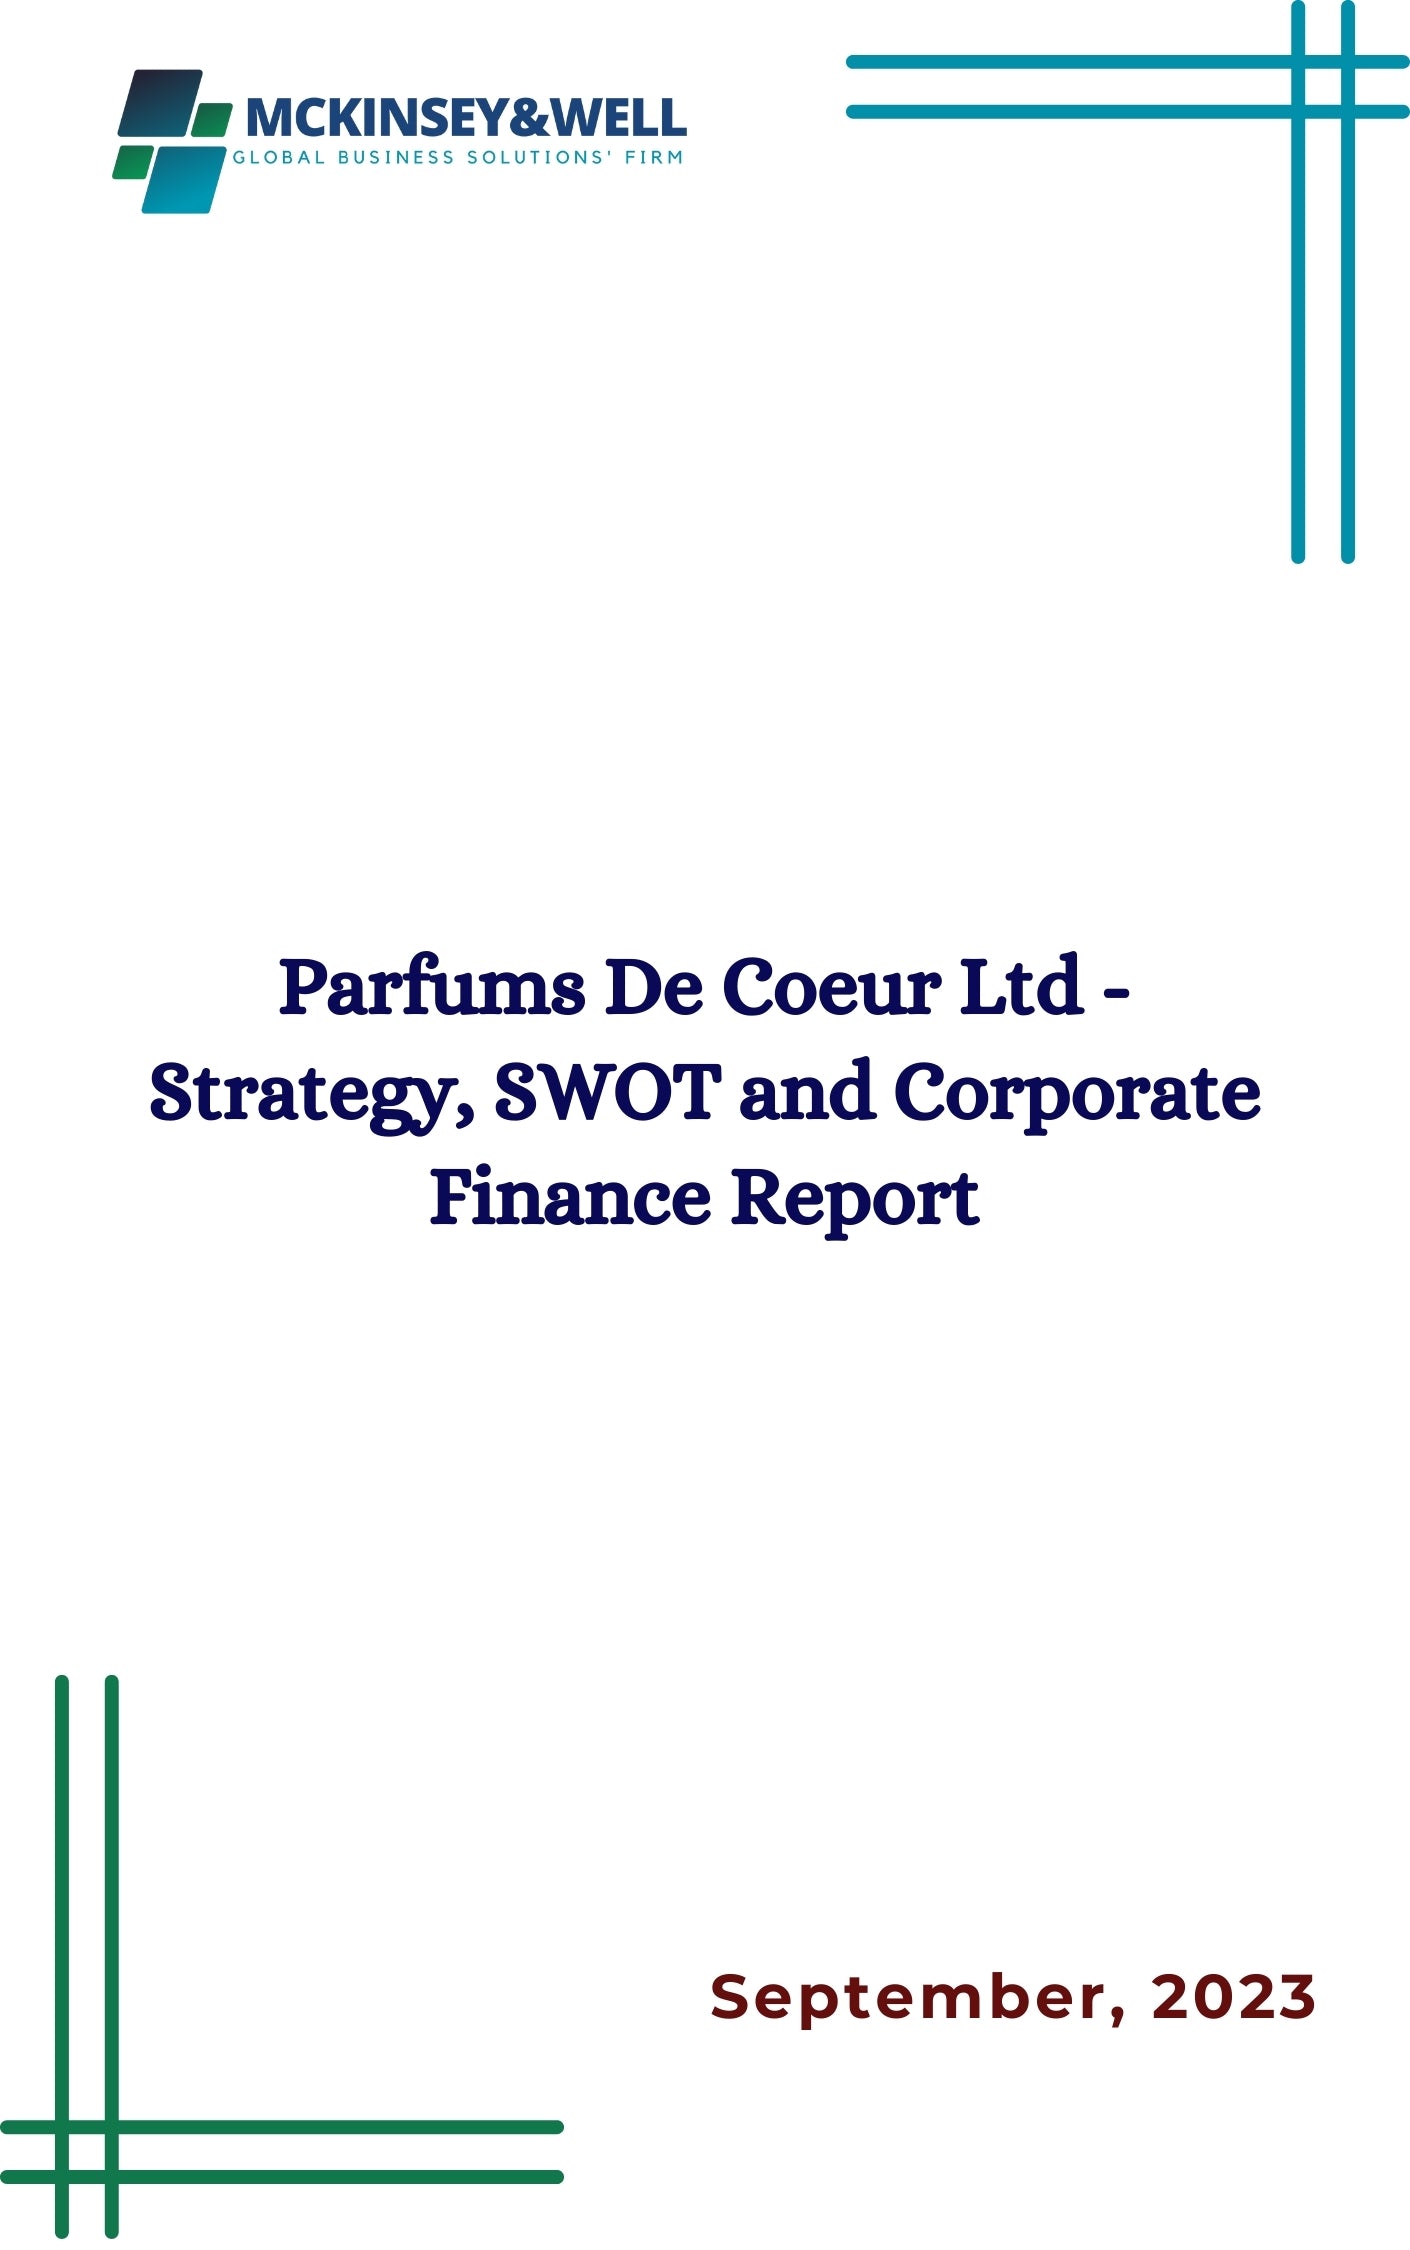 Parfums De Coeur Ltd - Strategy, SWOT and Corporate Finance Report